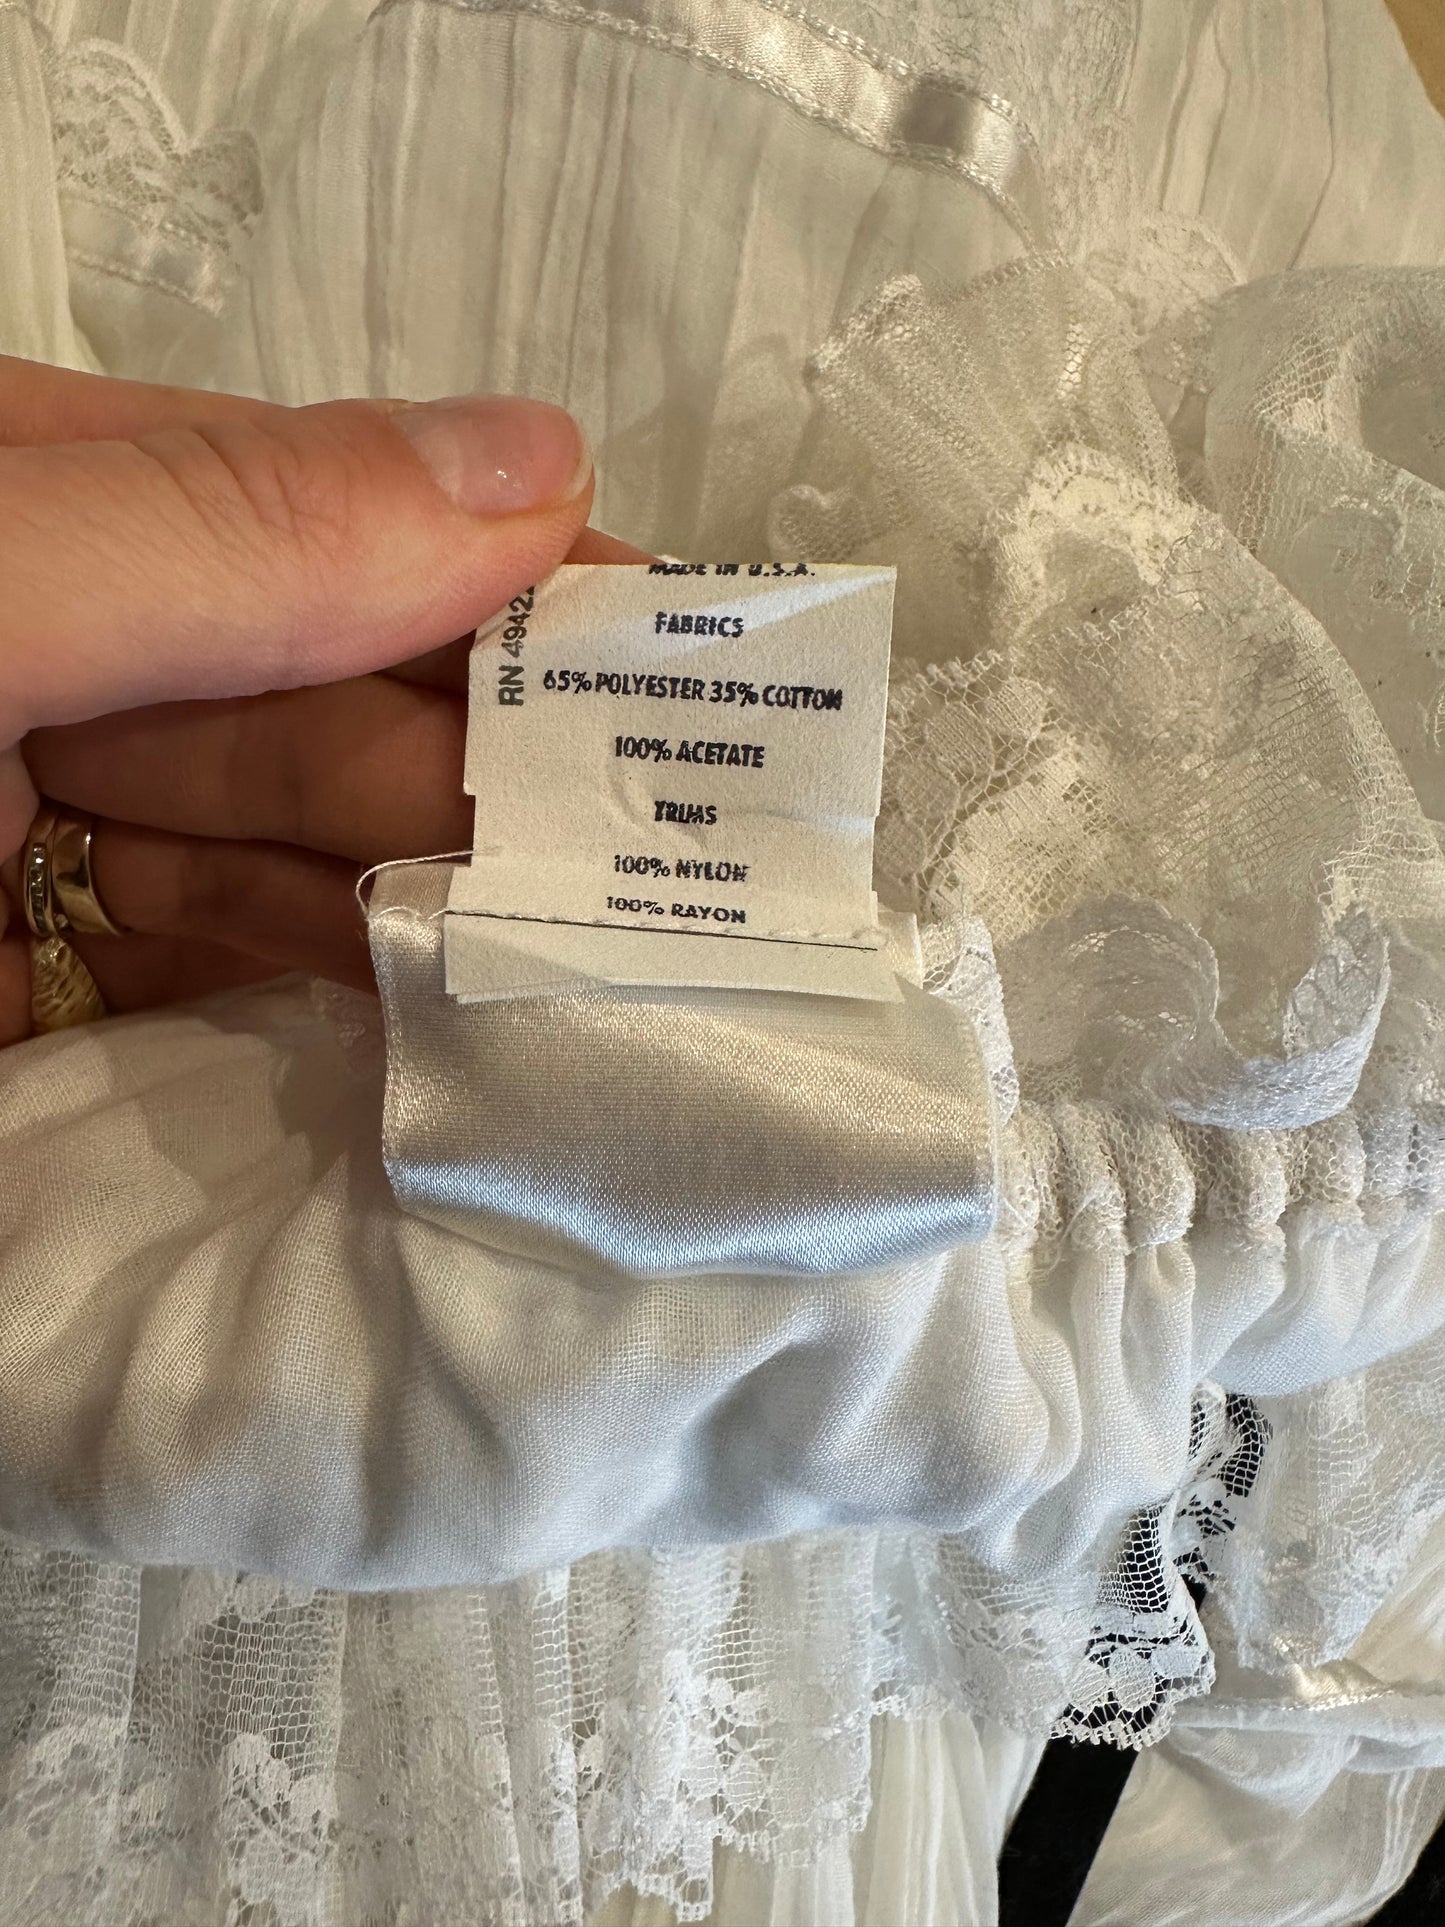 70s 'Gunne Sax' White Lace Tiered Dress / Medium